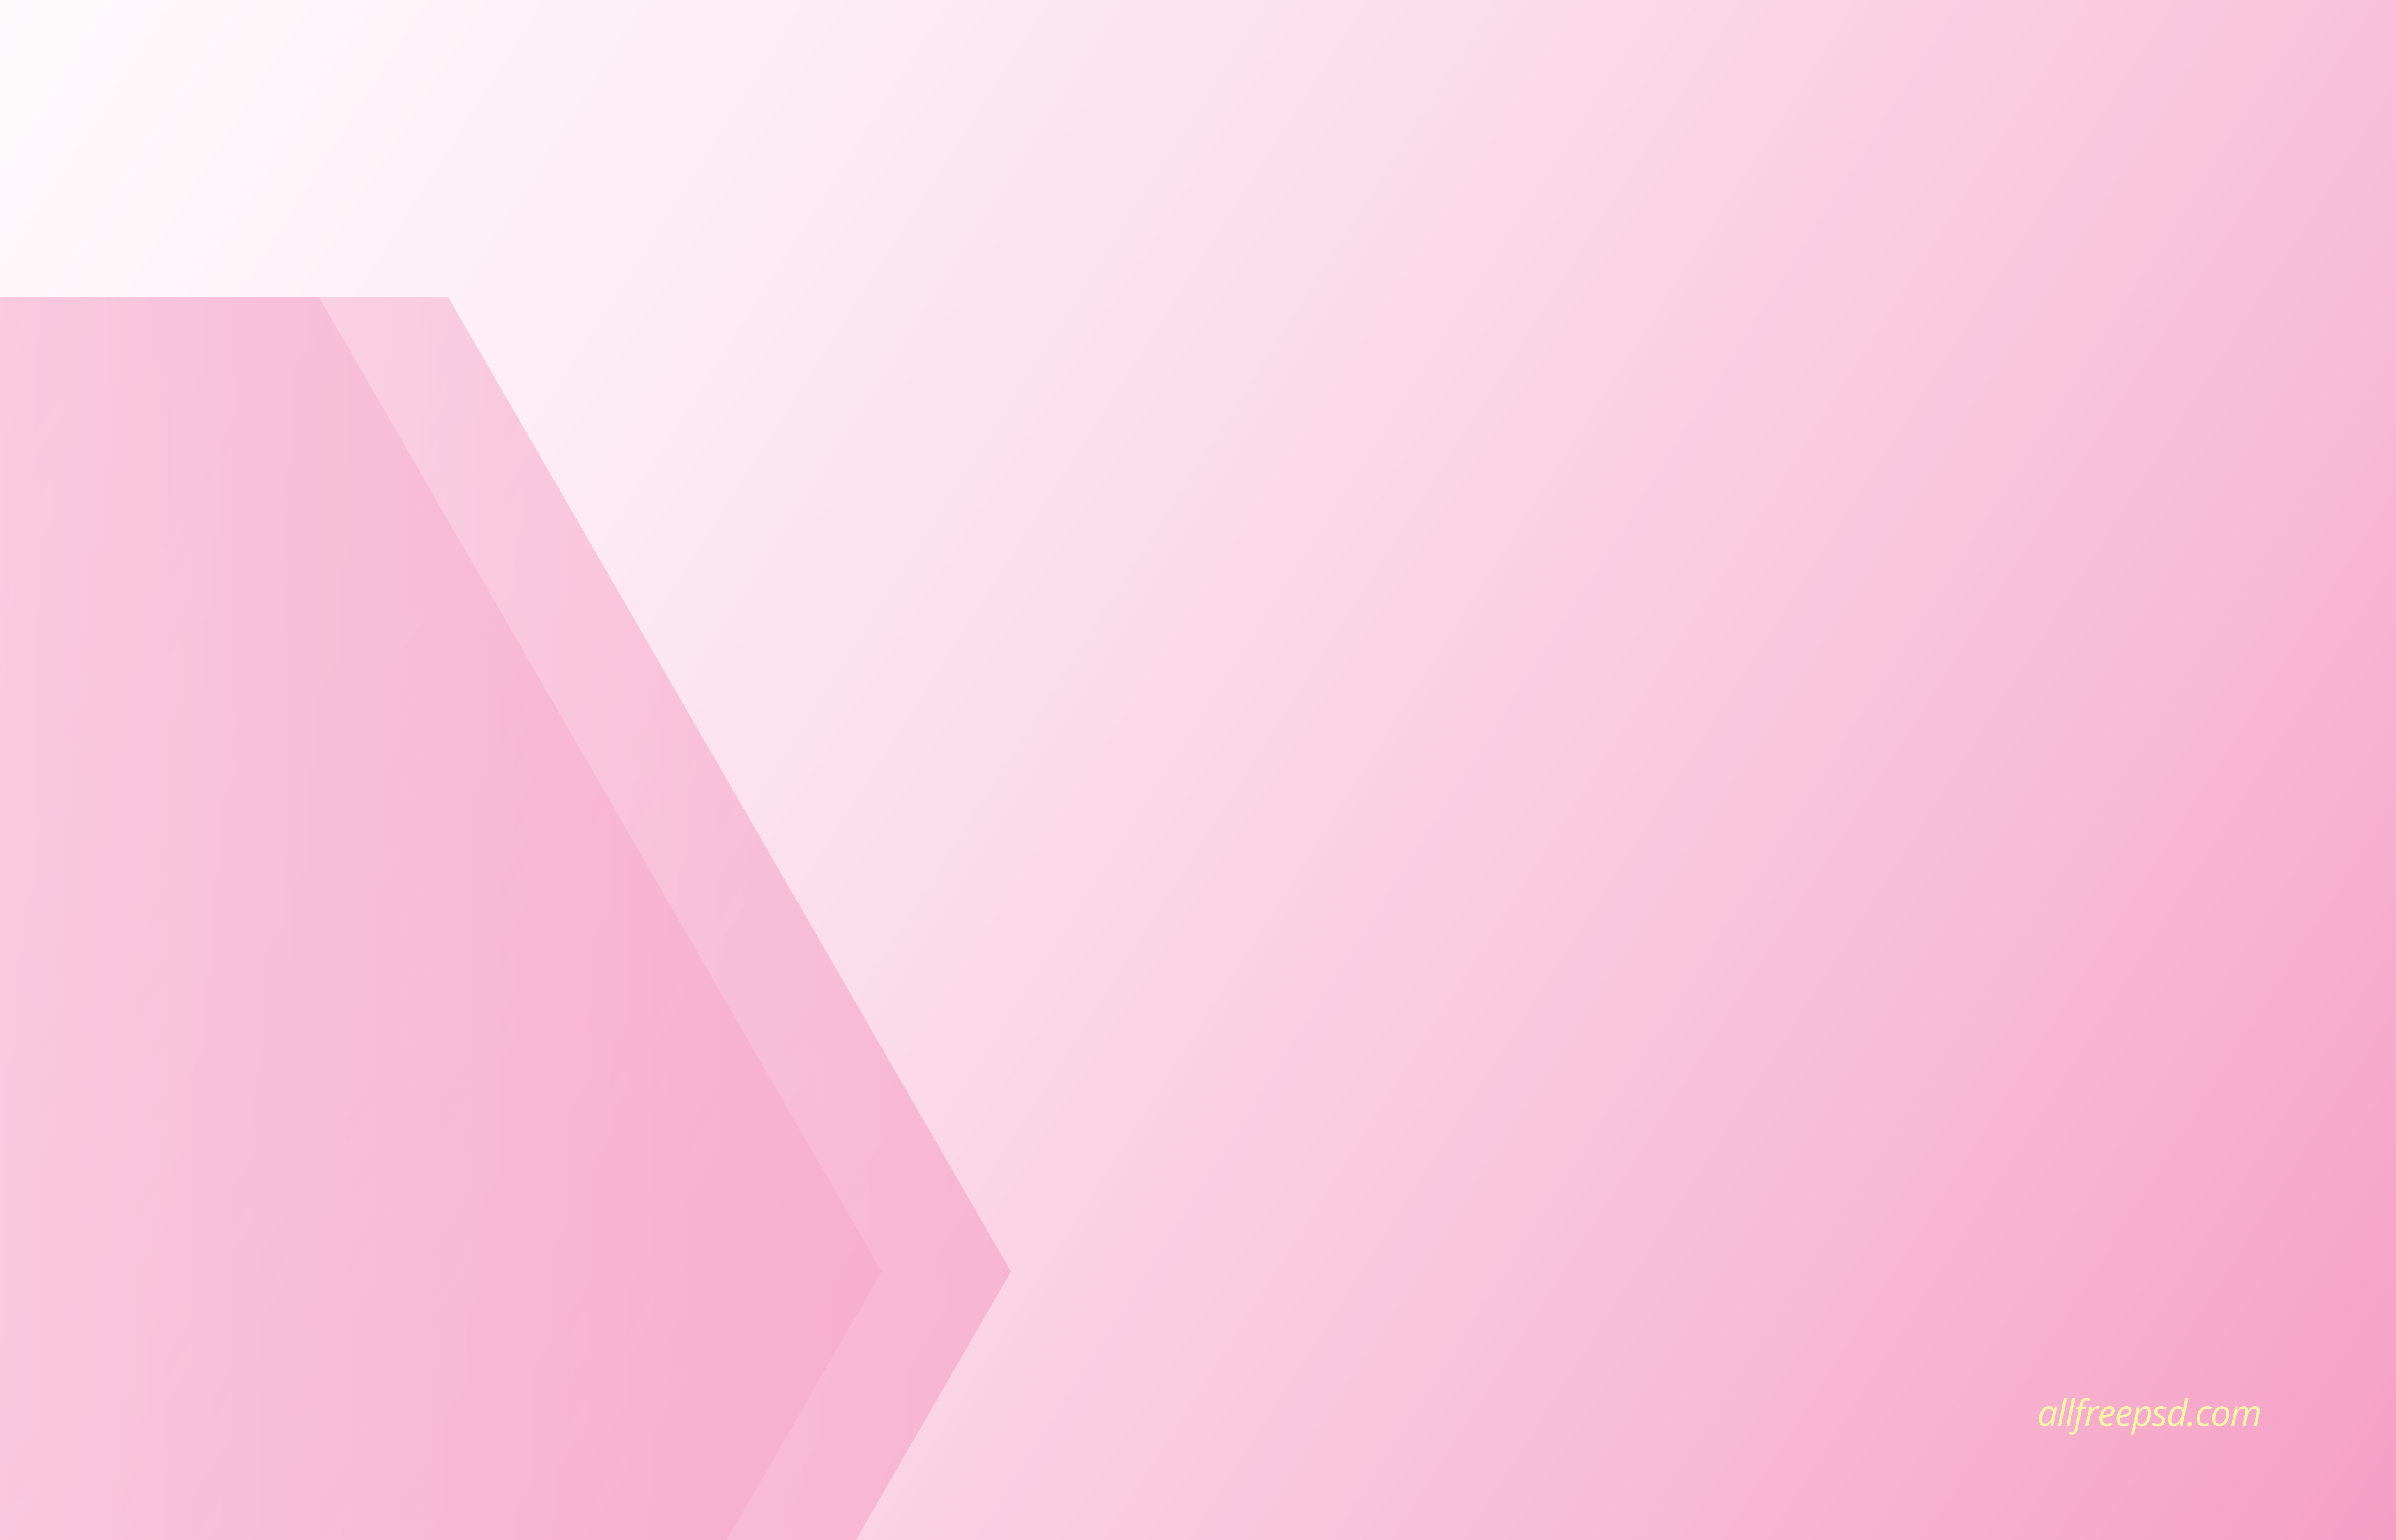 Download Hot Pink GFX Background Design